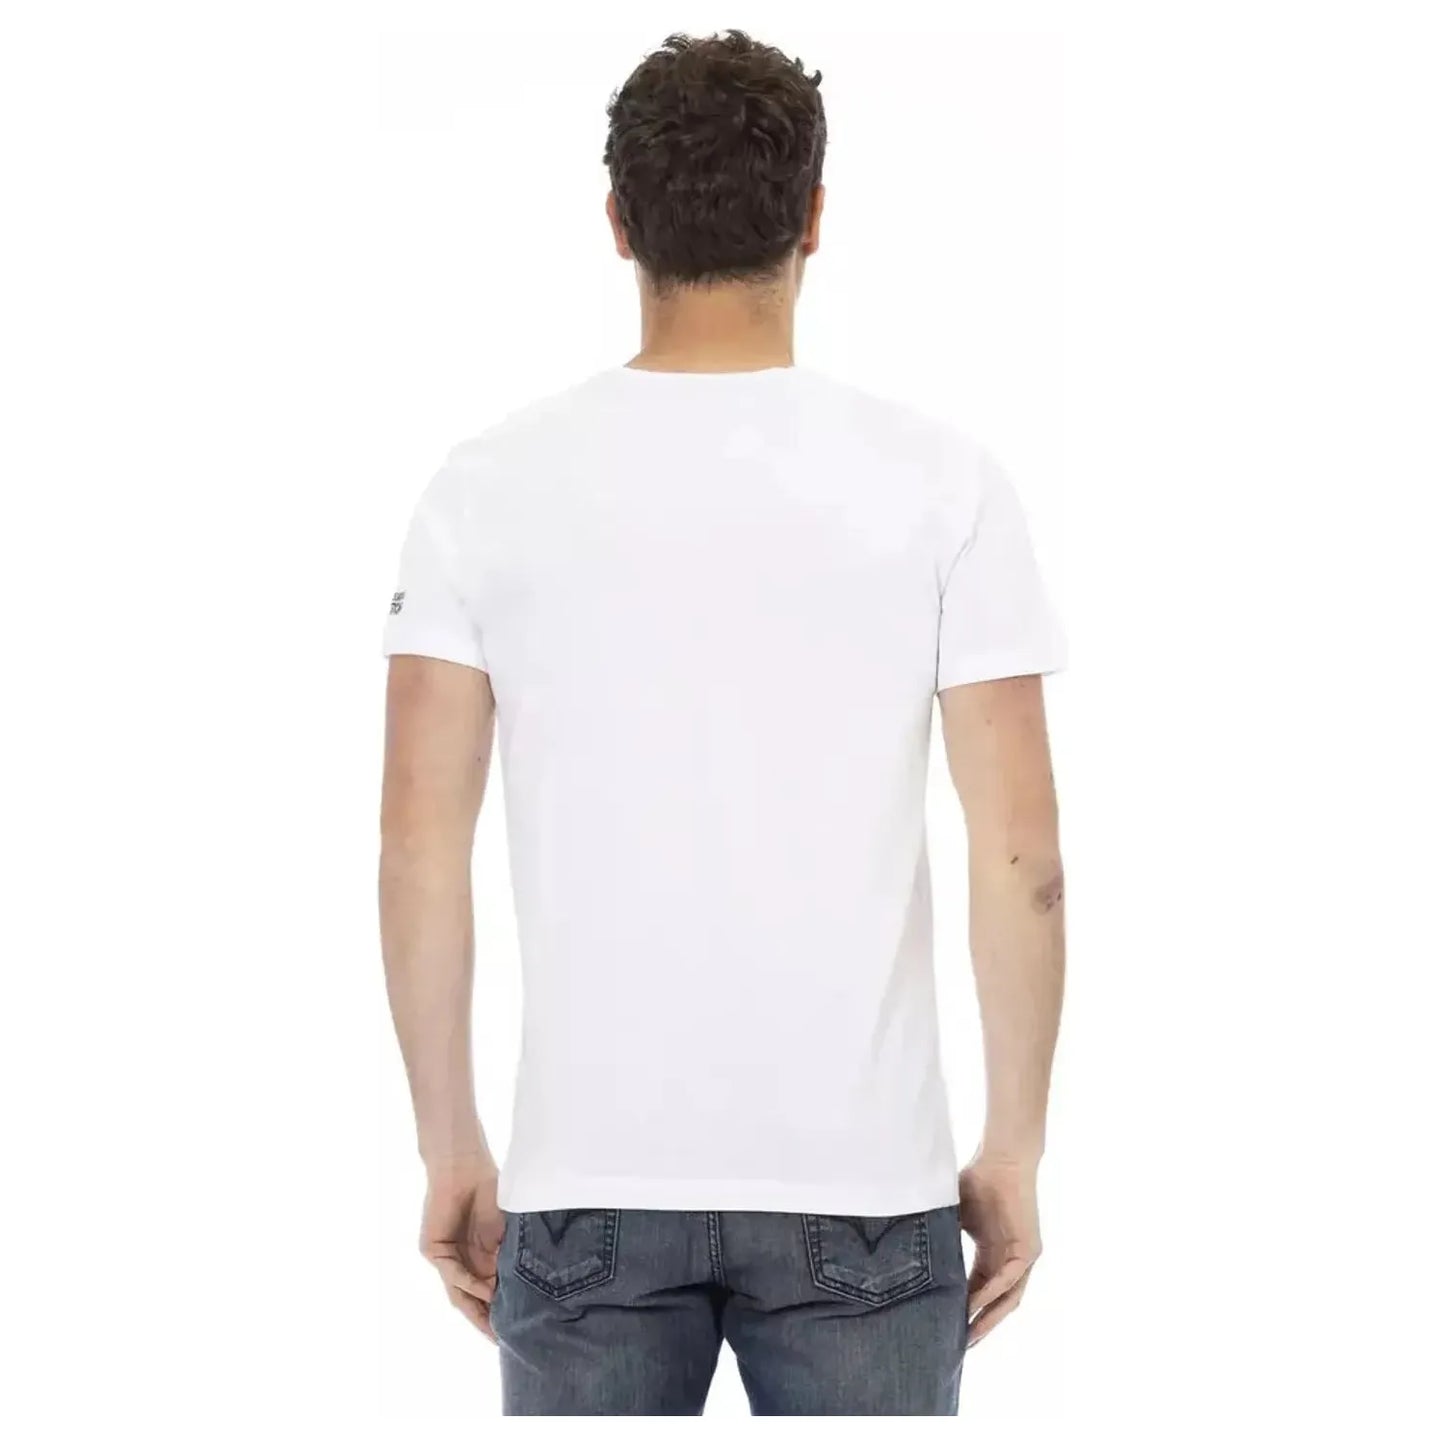 Trussardi Action Elegant White Tee with Artistic Front Print white-cotton-t-shirt-103